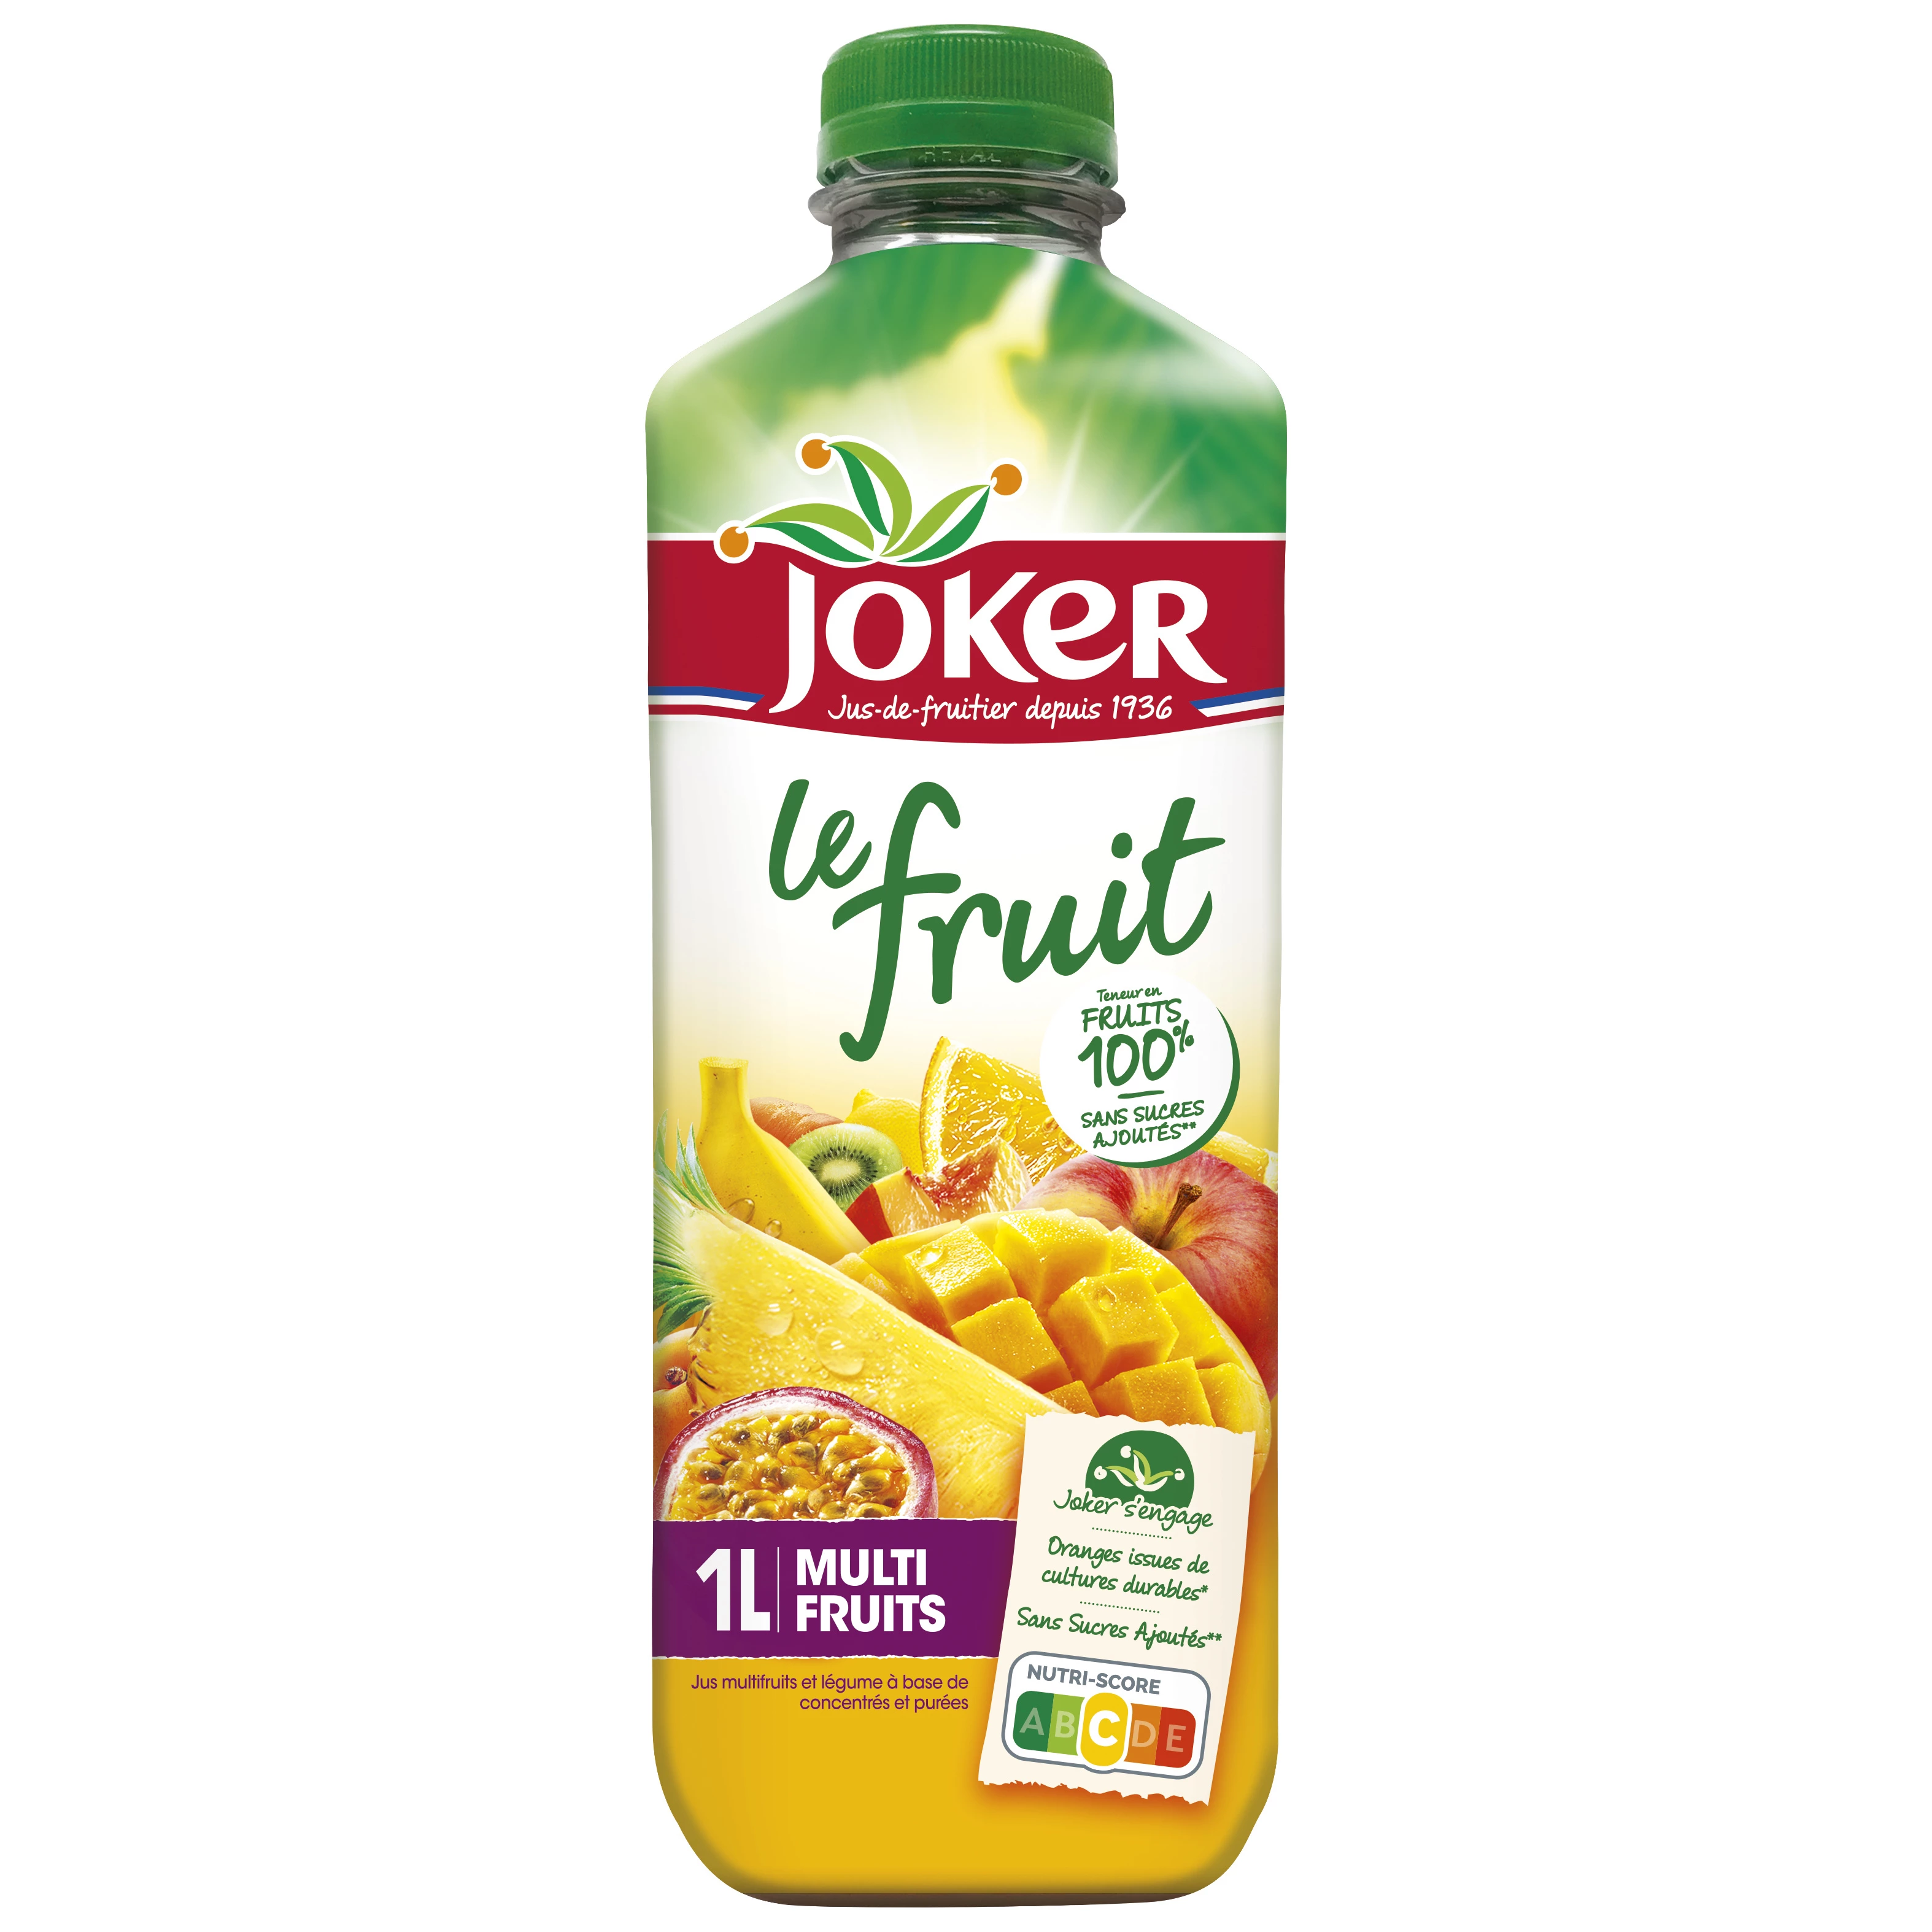 Joker Le Fruit Abc Multifr. Pe